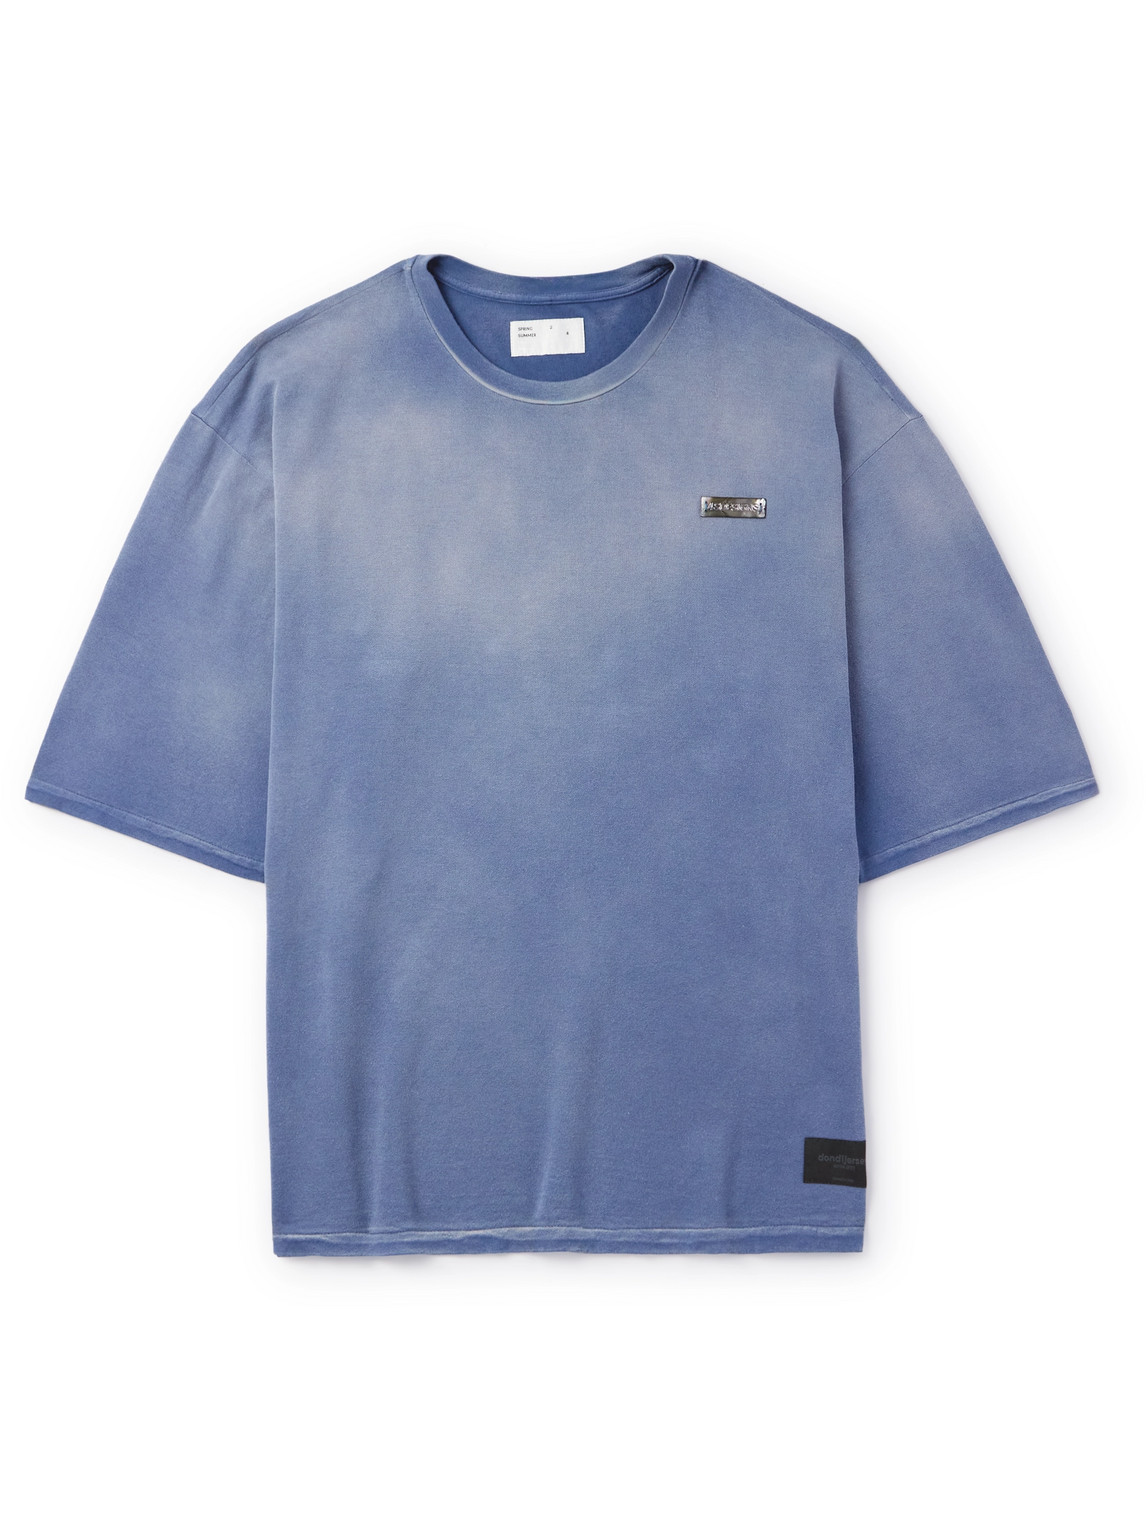 Logo-Appliquéd Tie-Dyed Cotton and Linen-Blend Jersey T-Shirt